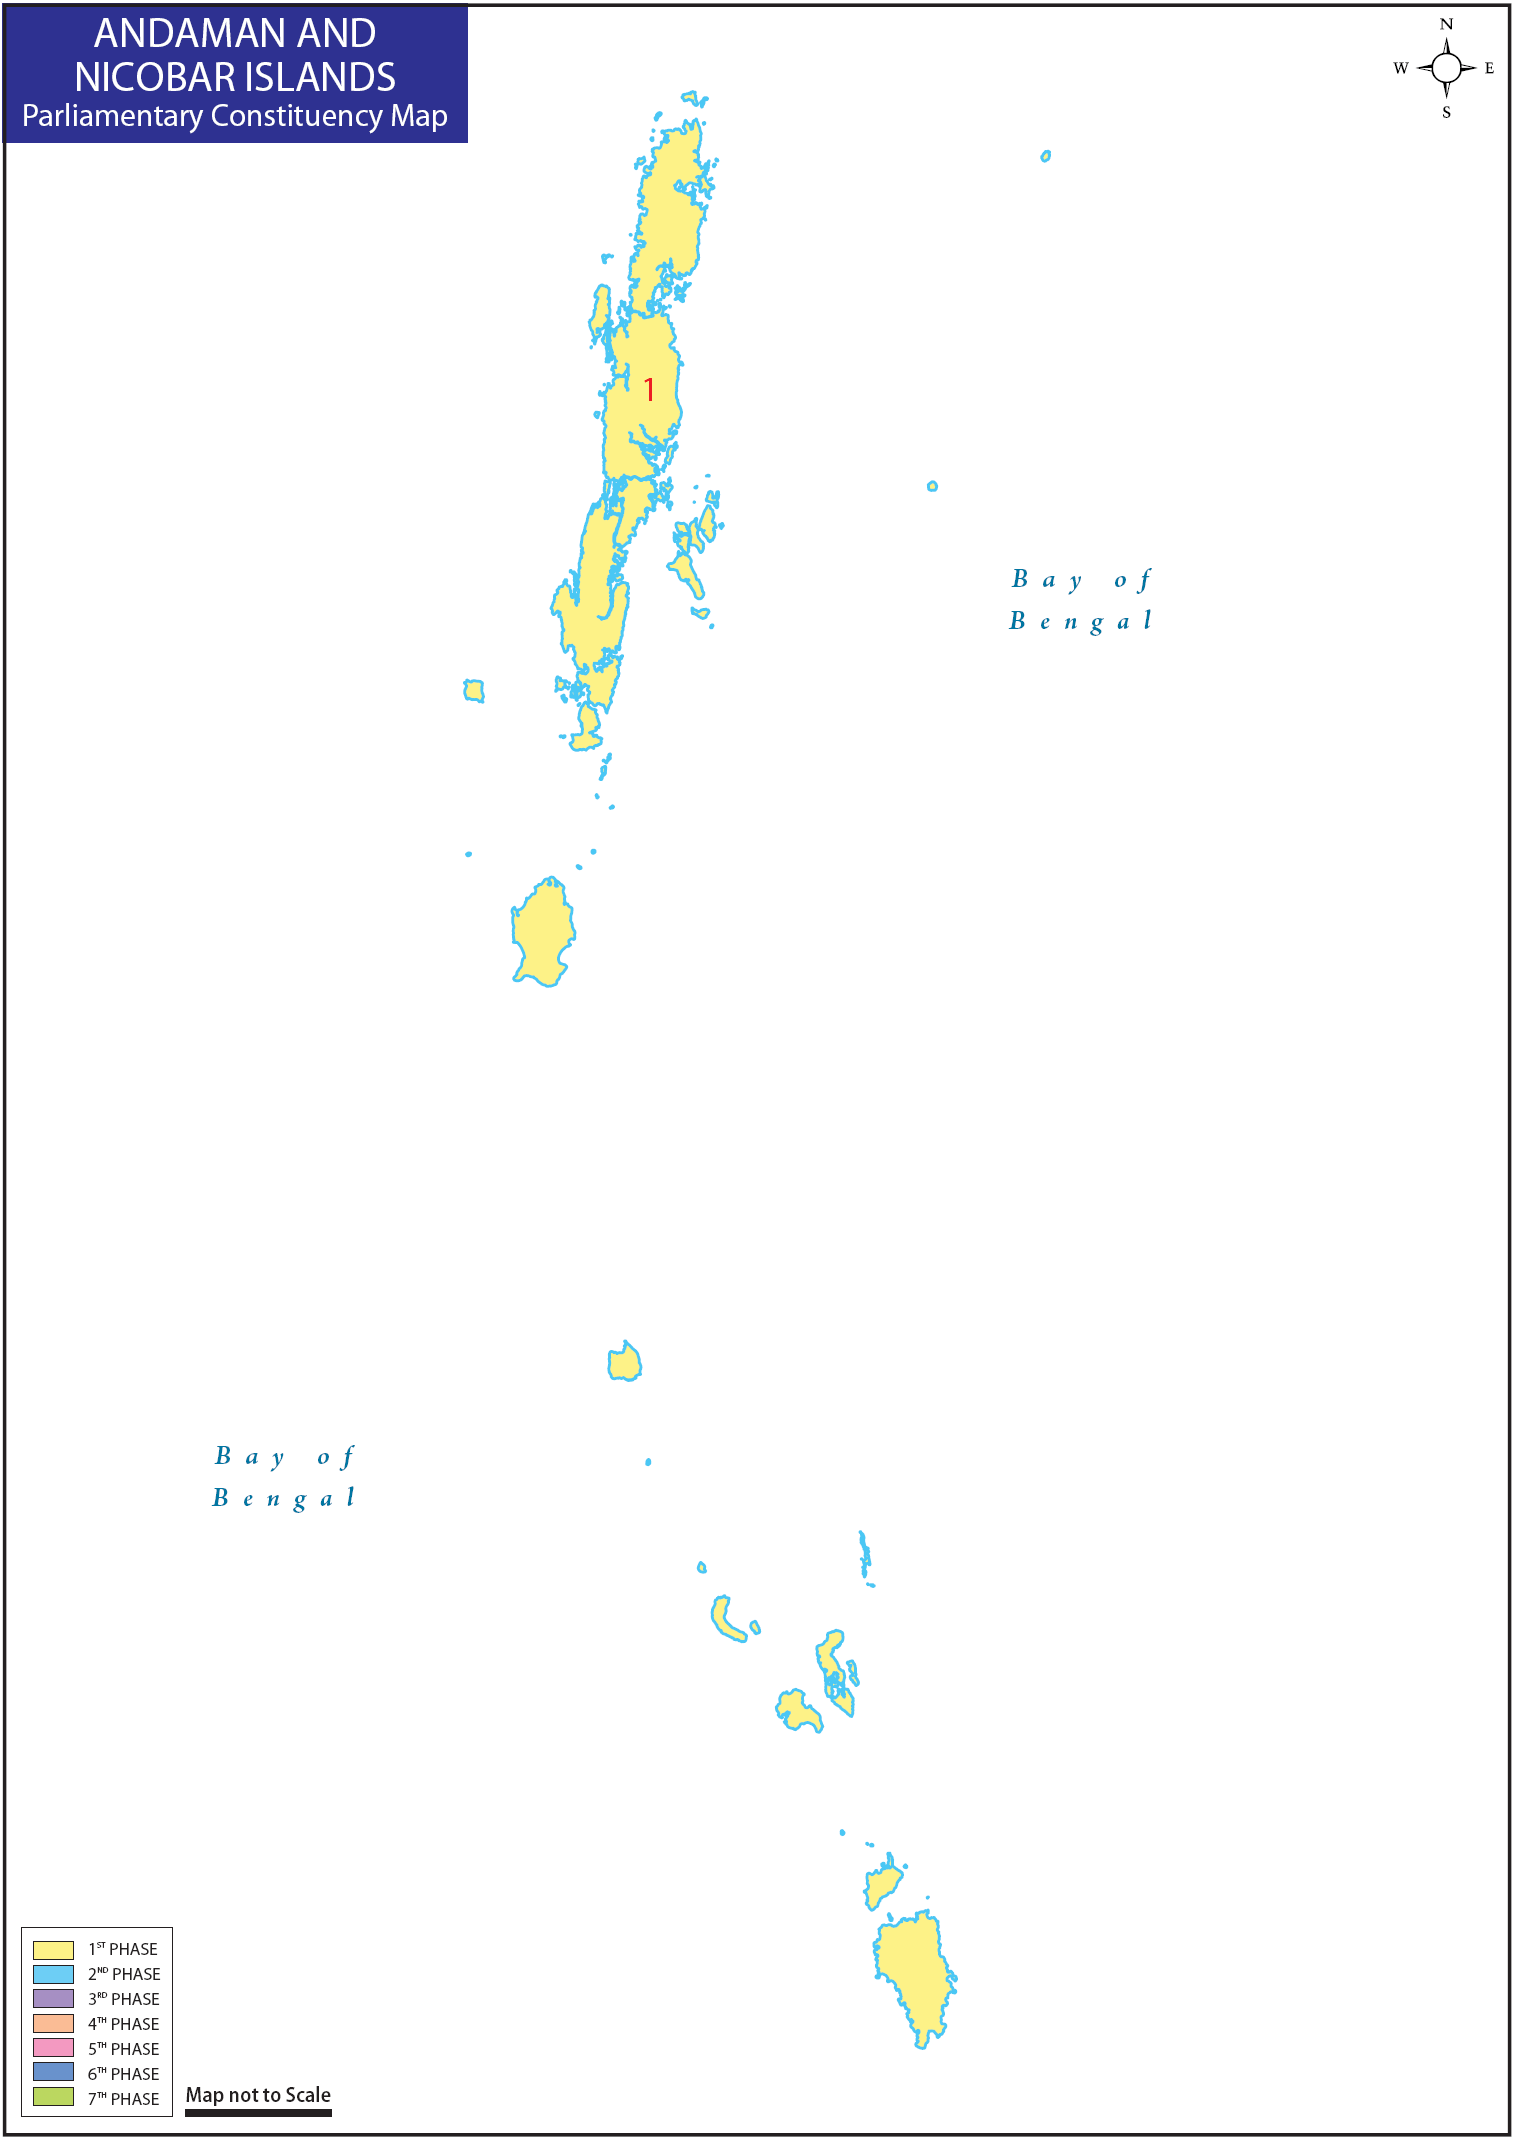 Andaman and Nicobar Parliamentary Constituency Map